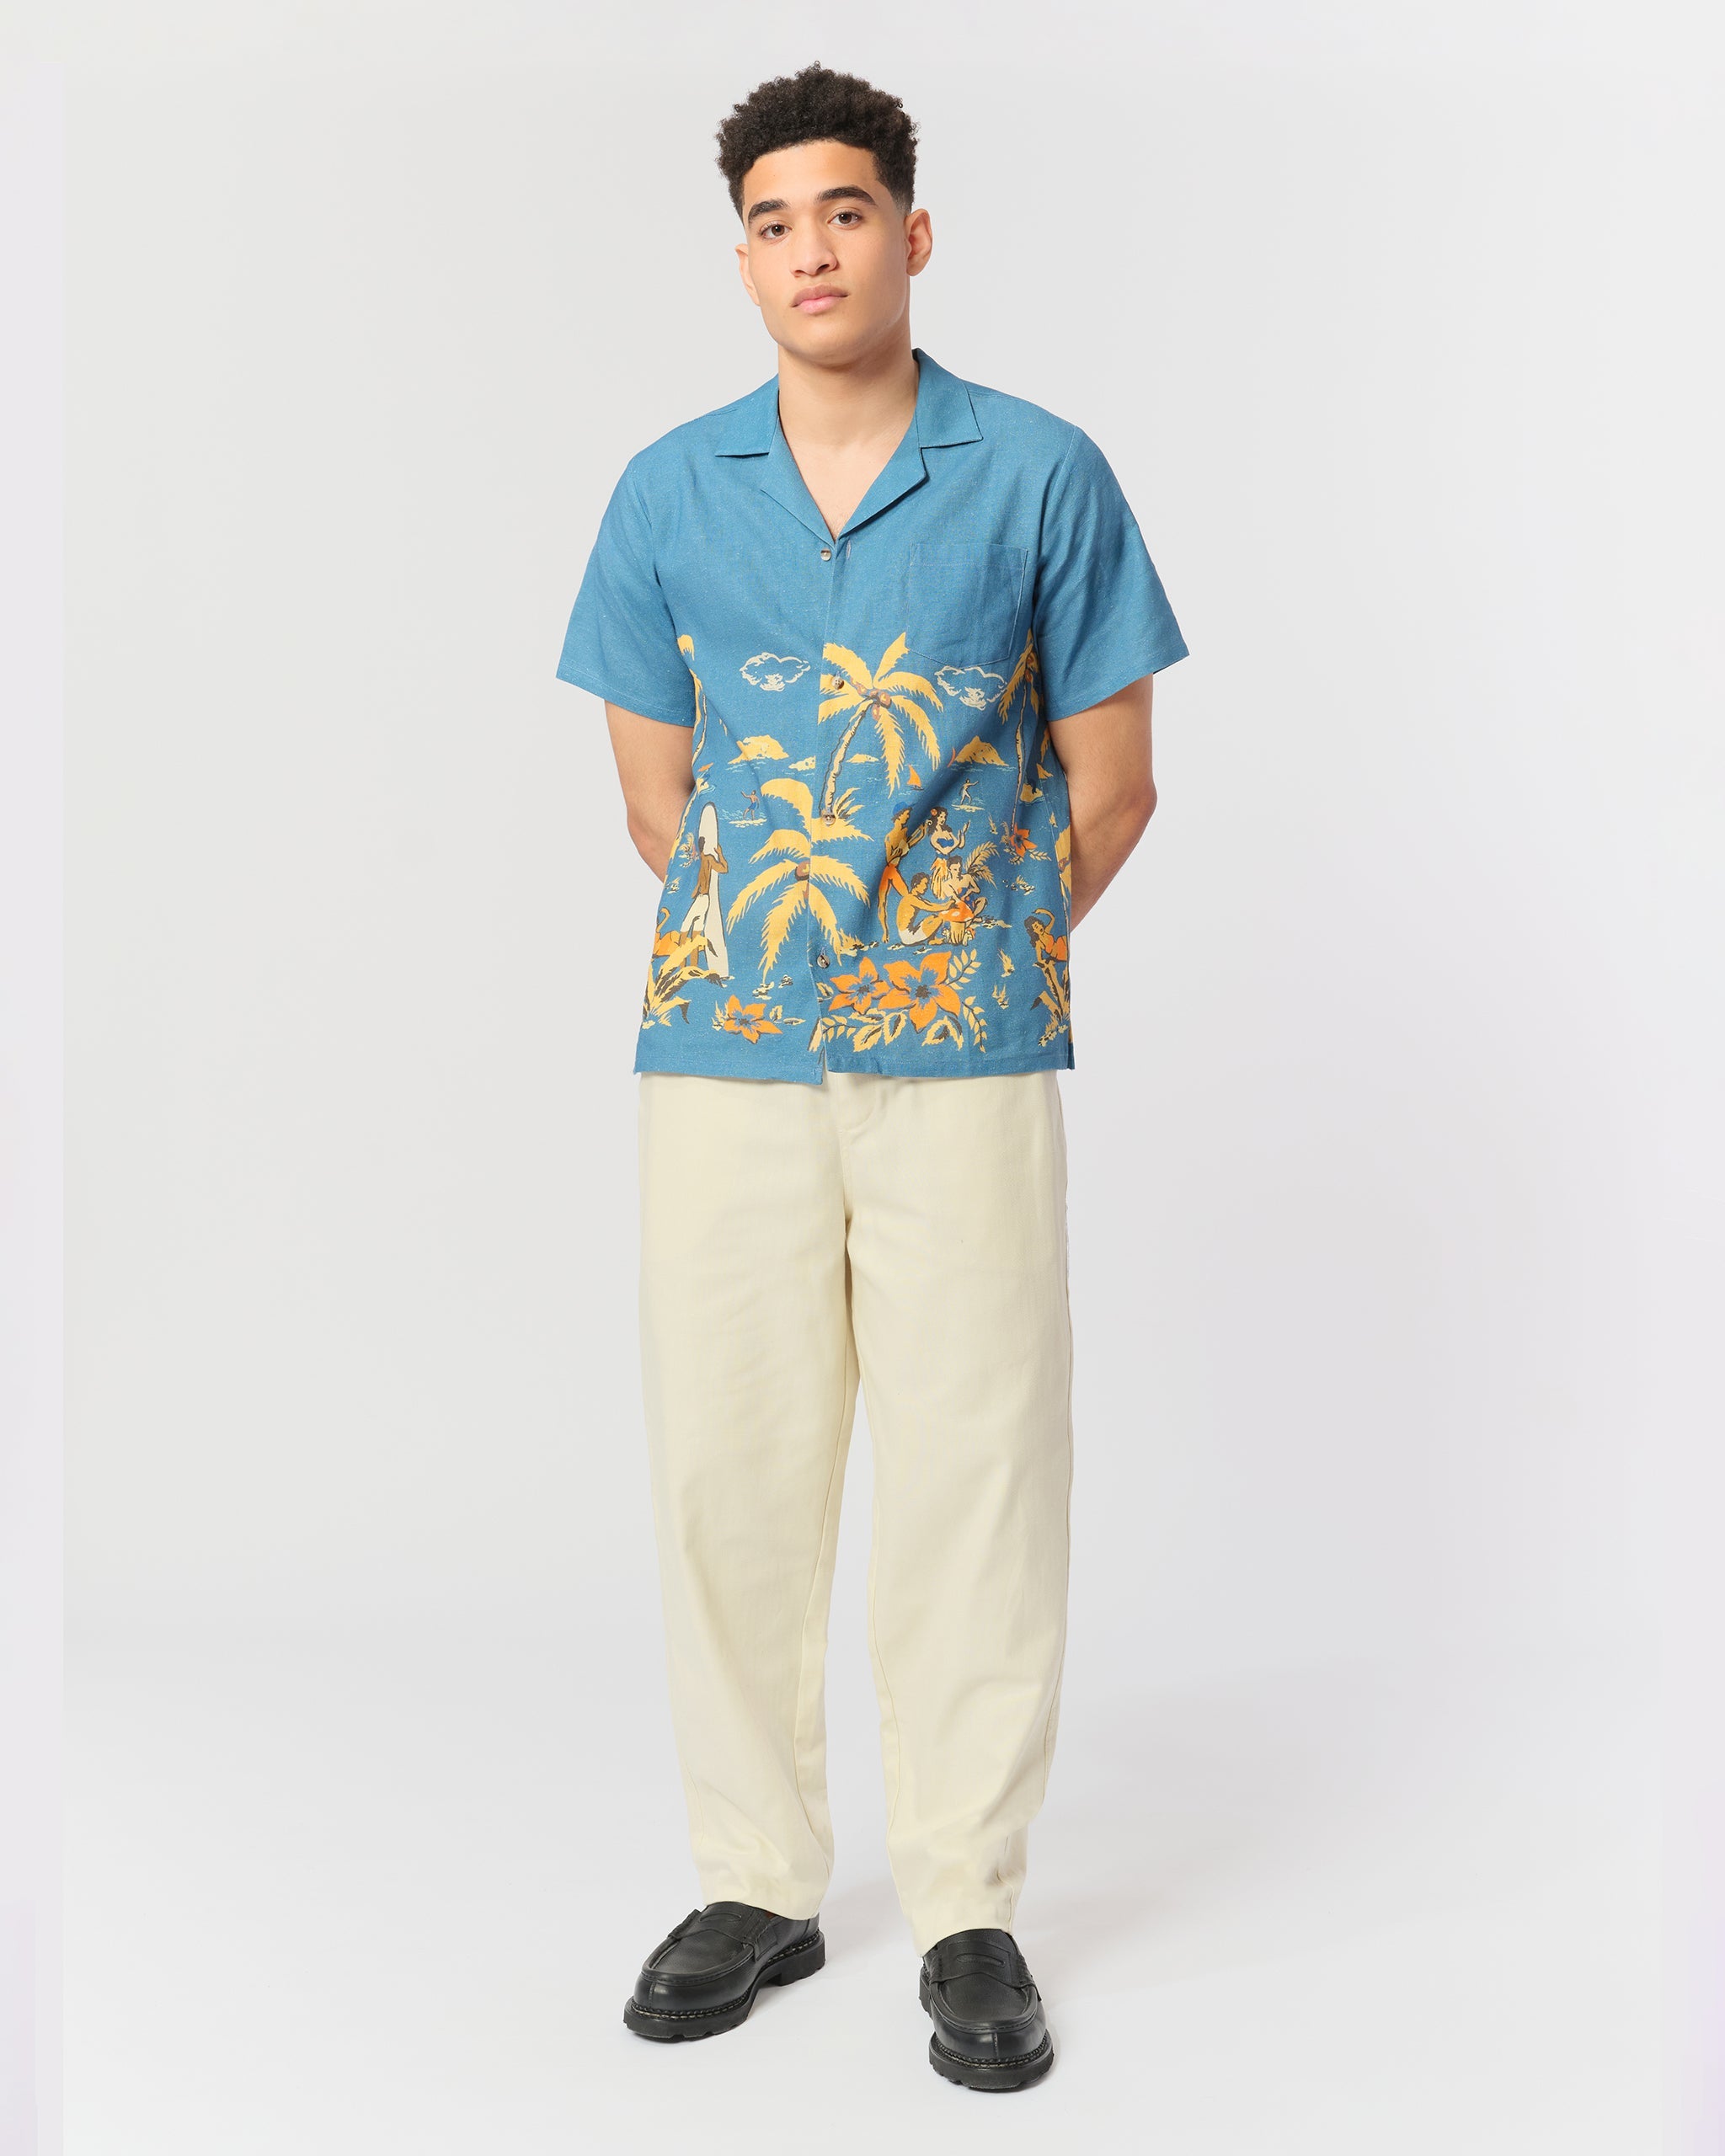 Blue linen camp shirt with Hawaiian-inspired printed beach scene Shot on model